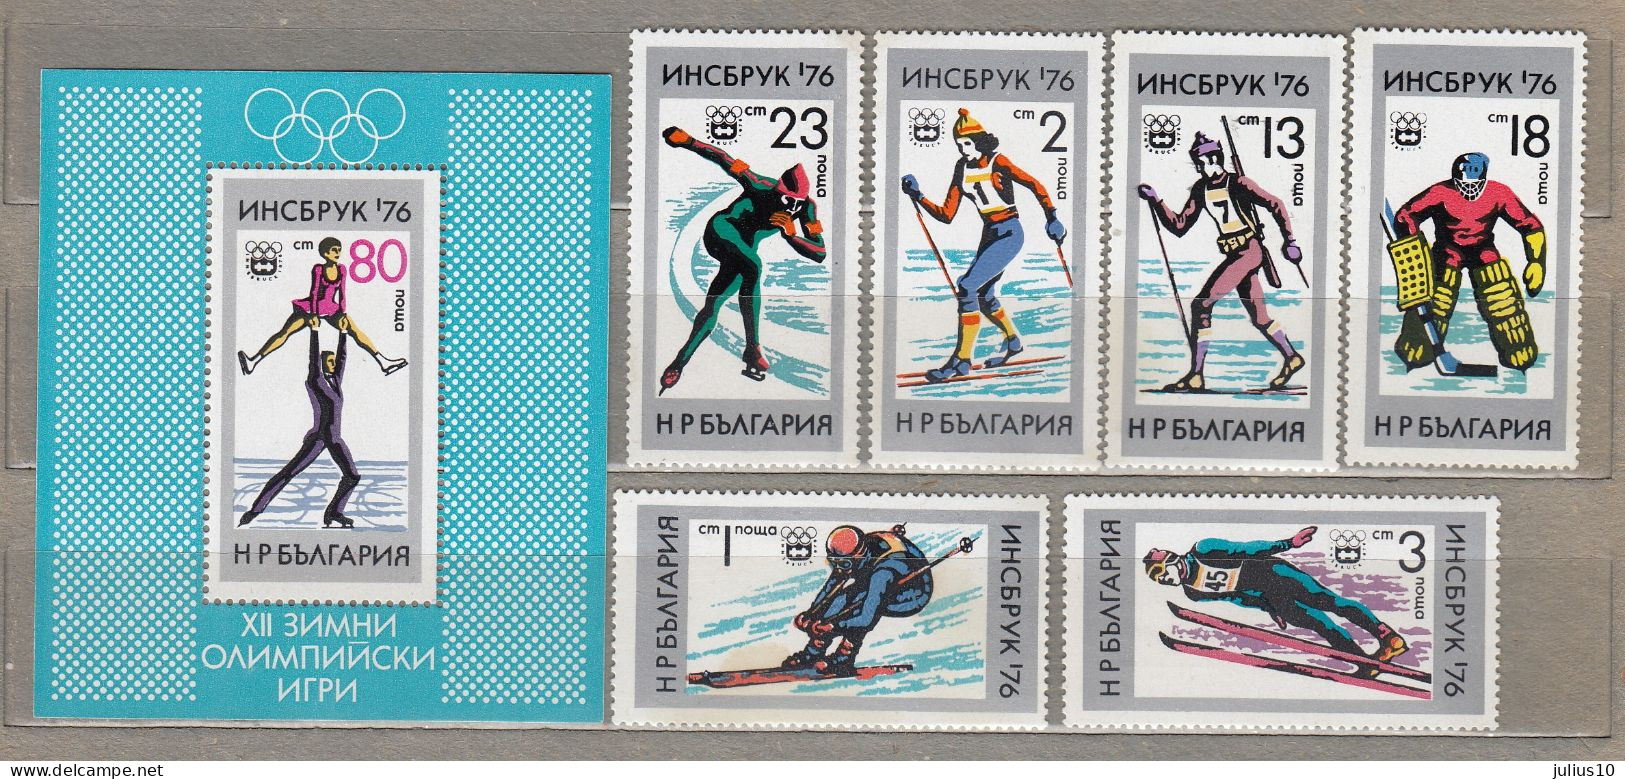 BULGARIA 1976 Winter Olympic Games CV 7.0 EUR MNH Michel 2463-2468, Bl 61 #Sport148 - Inverno1976: Innsbruck